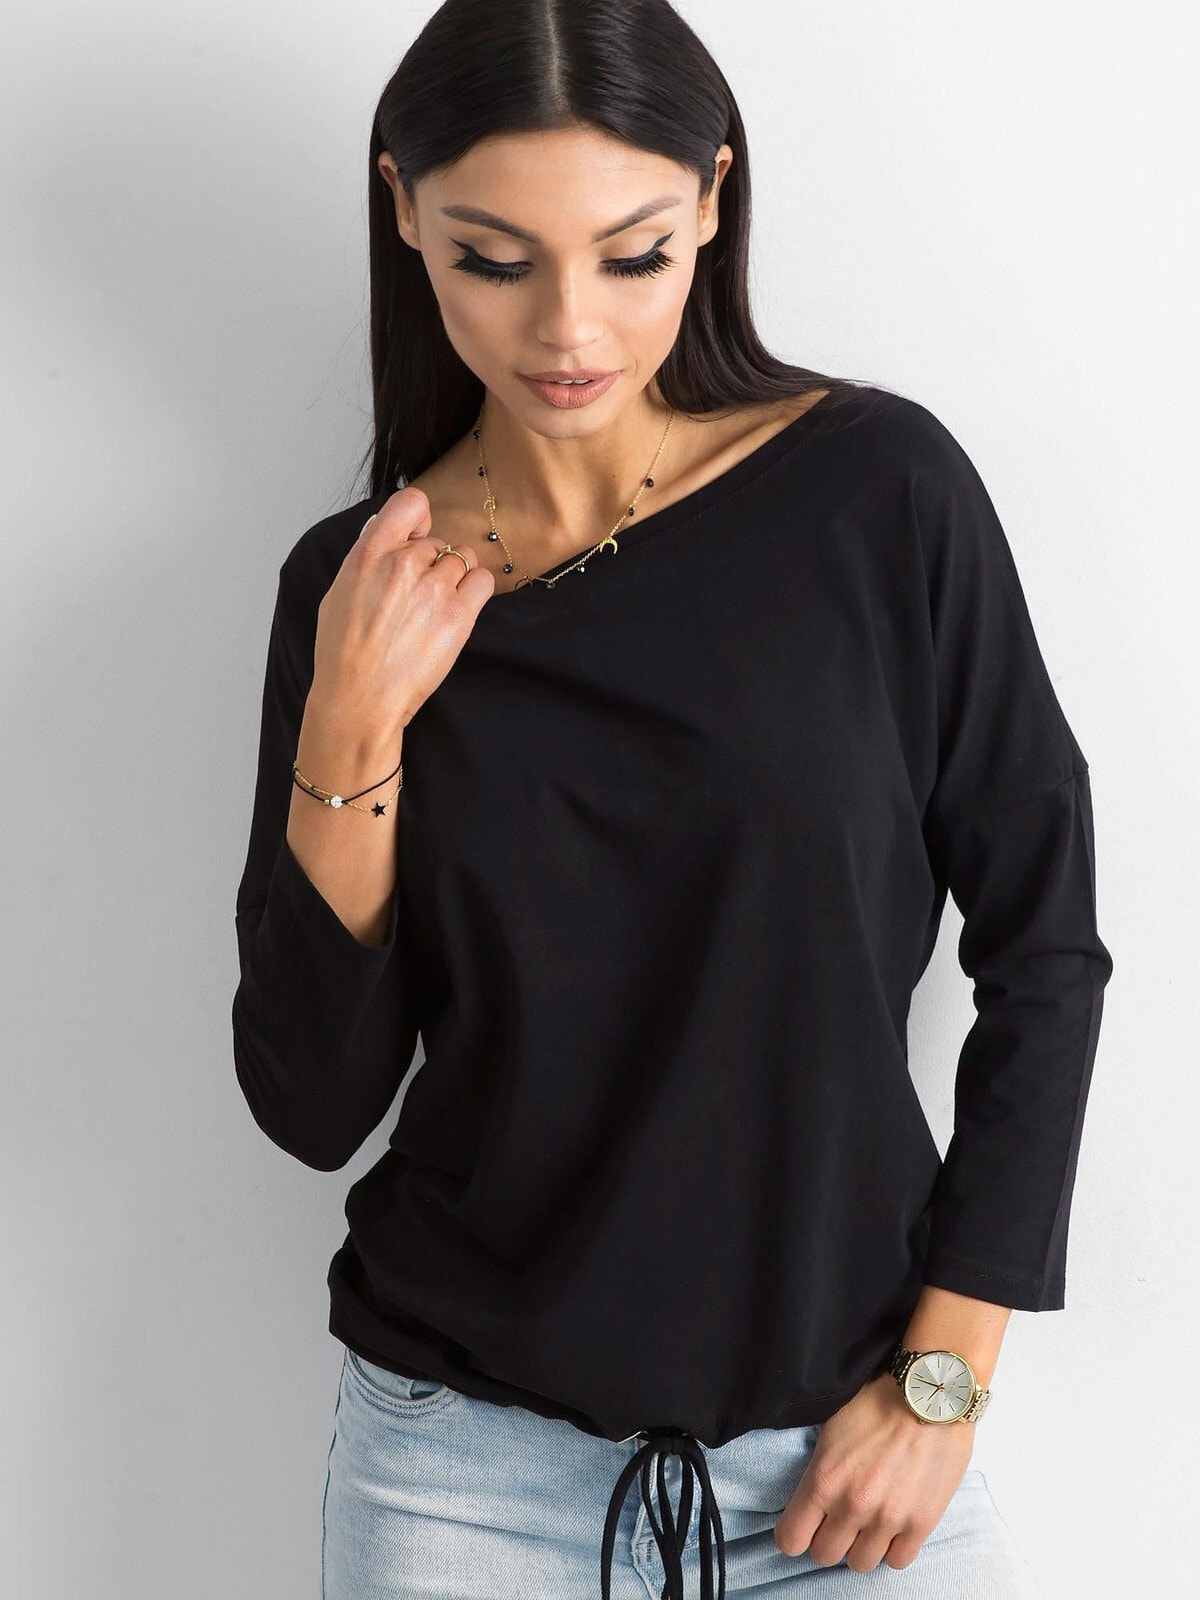 Женская блузка на завязках с рукавом 3/4 черная Factory Price